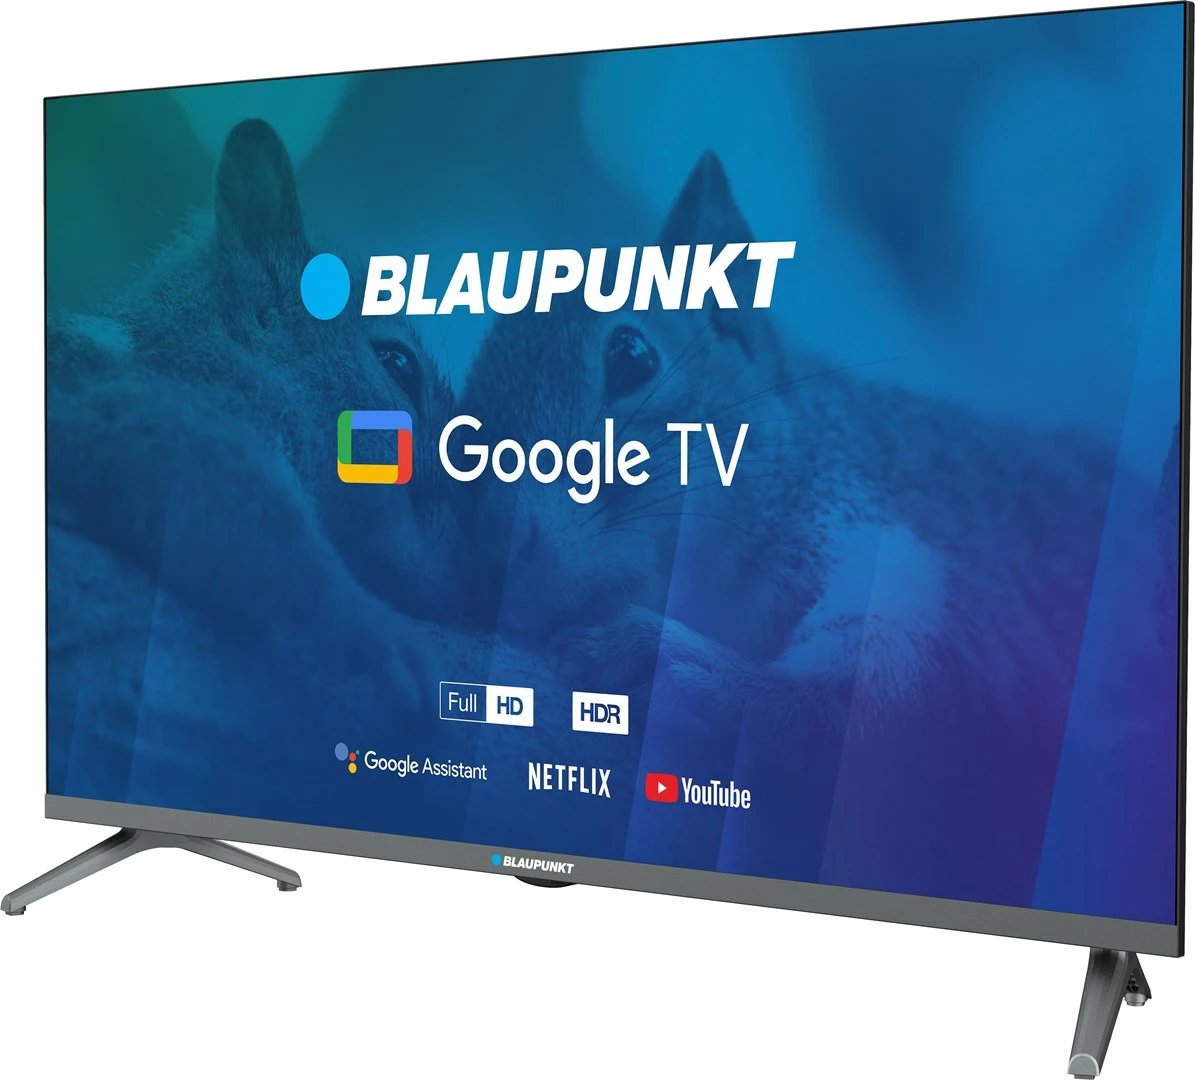 Televizor Blaupunkt 32FBG5000S 32", Full HD LED, GoogleTV, Dolby Digital, WiFi 2,4-5GHz, BT, ngjyrë e zezë